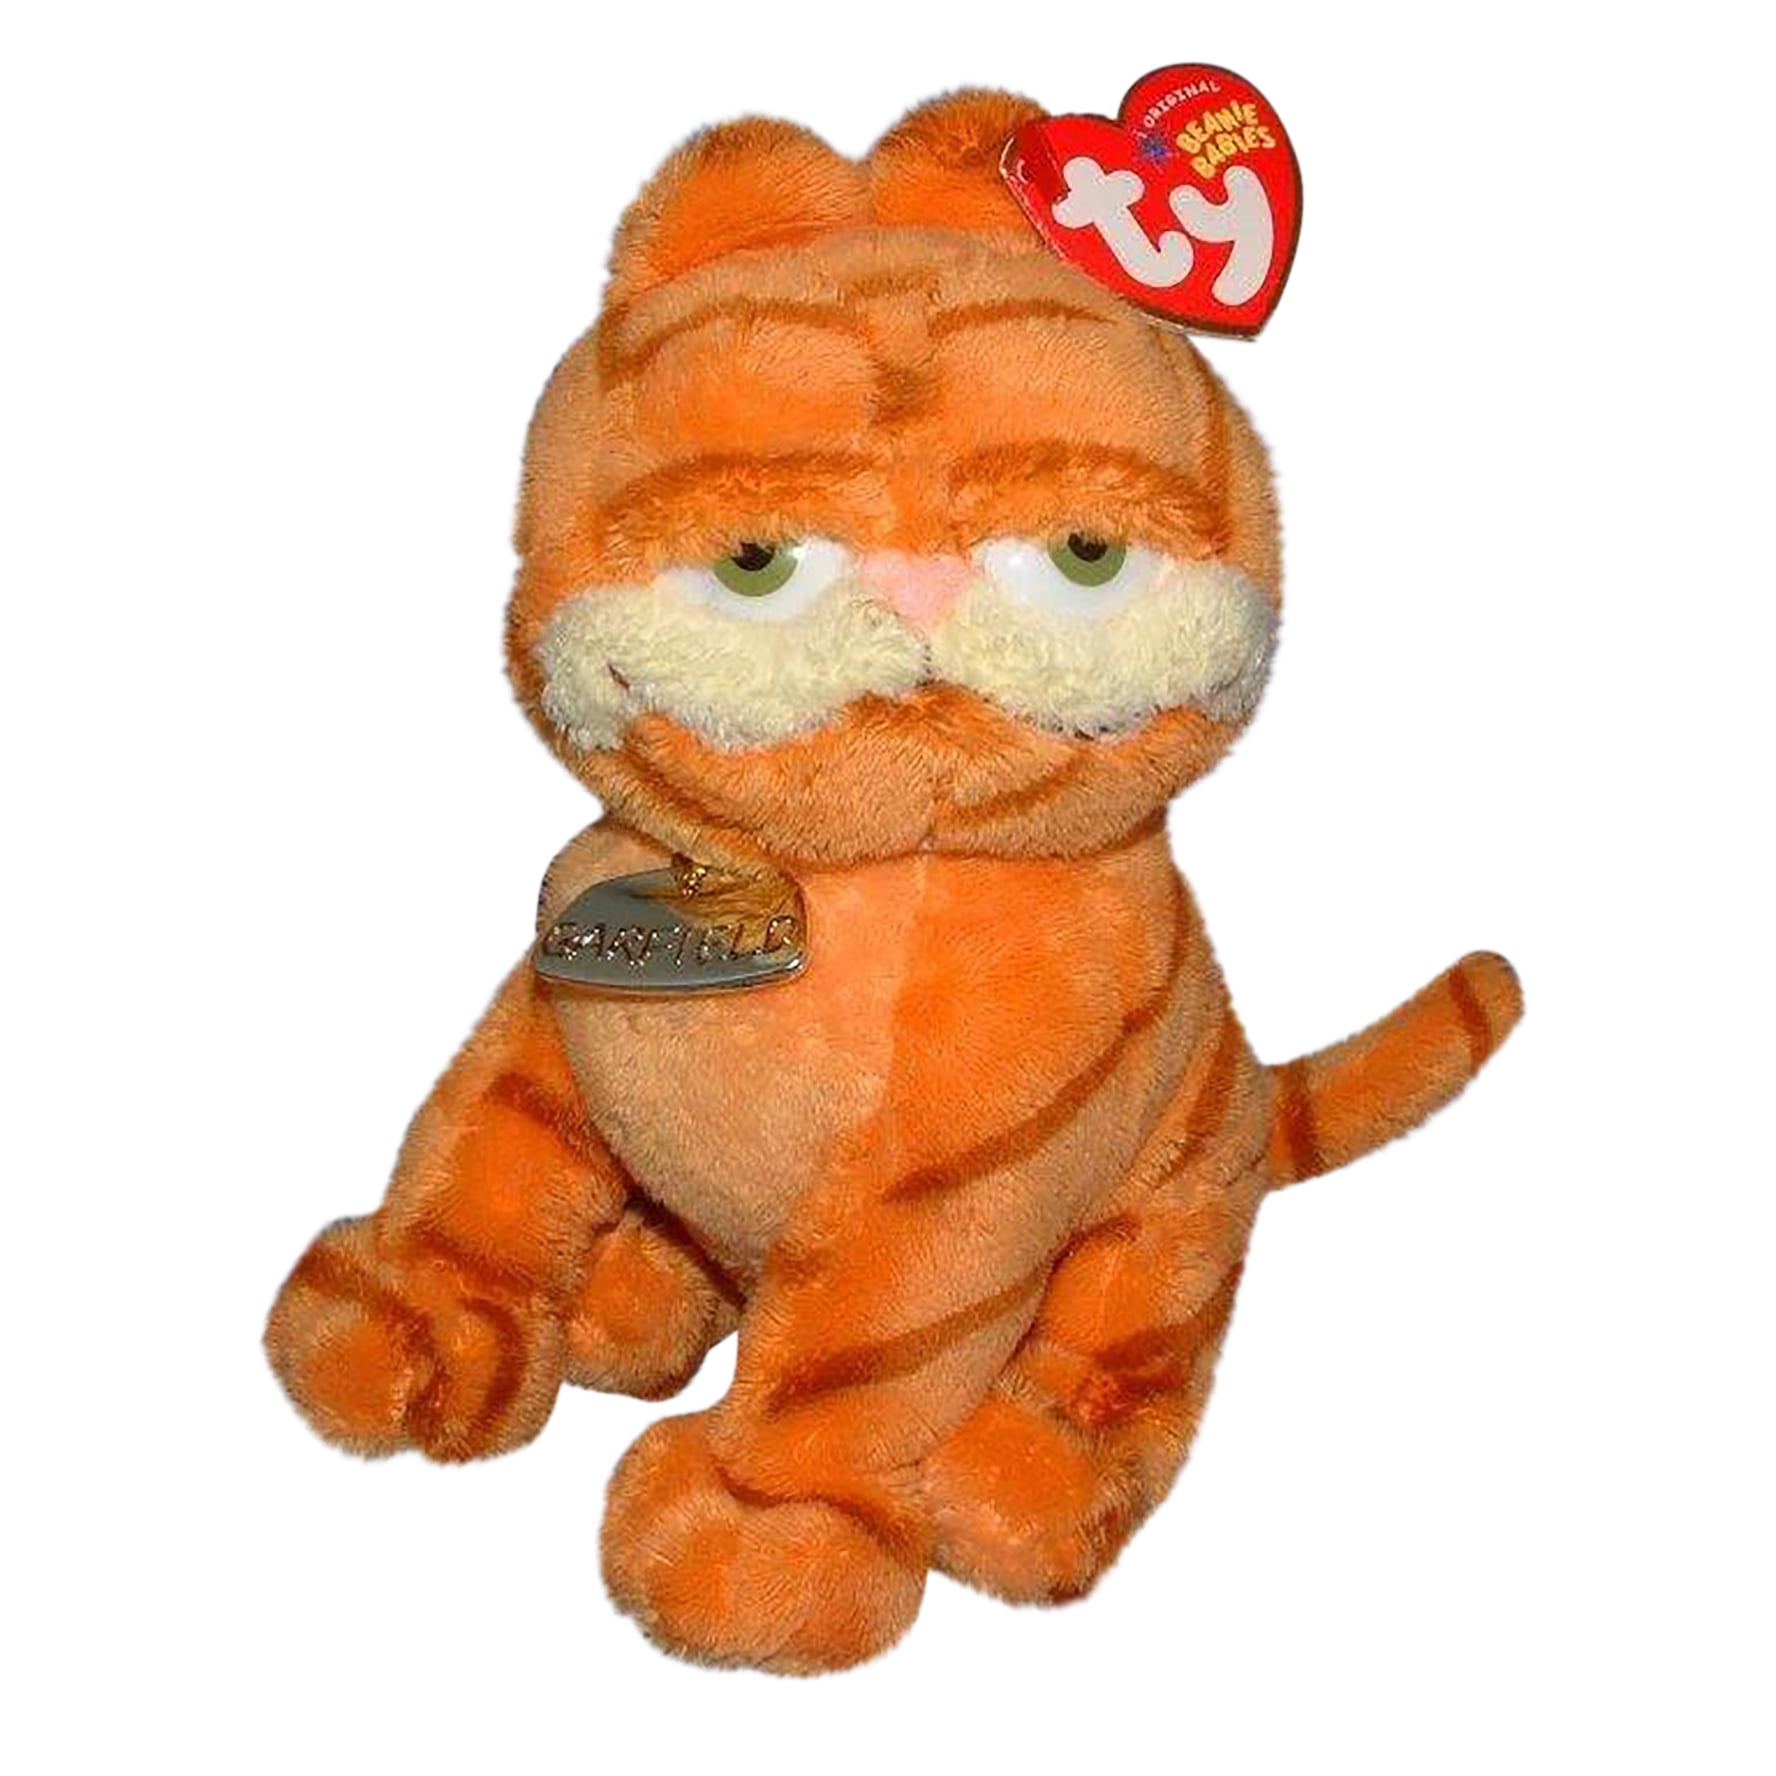 Garfield Other Stuffed Animals